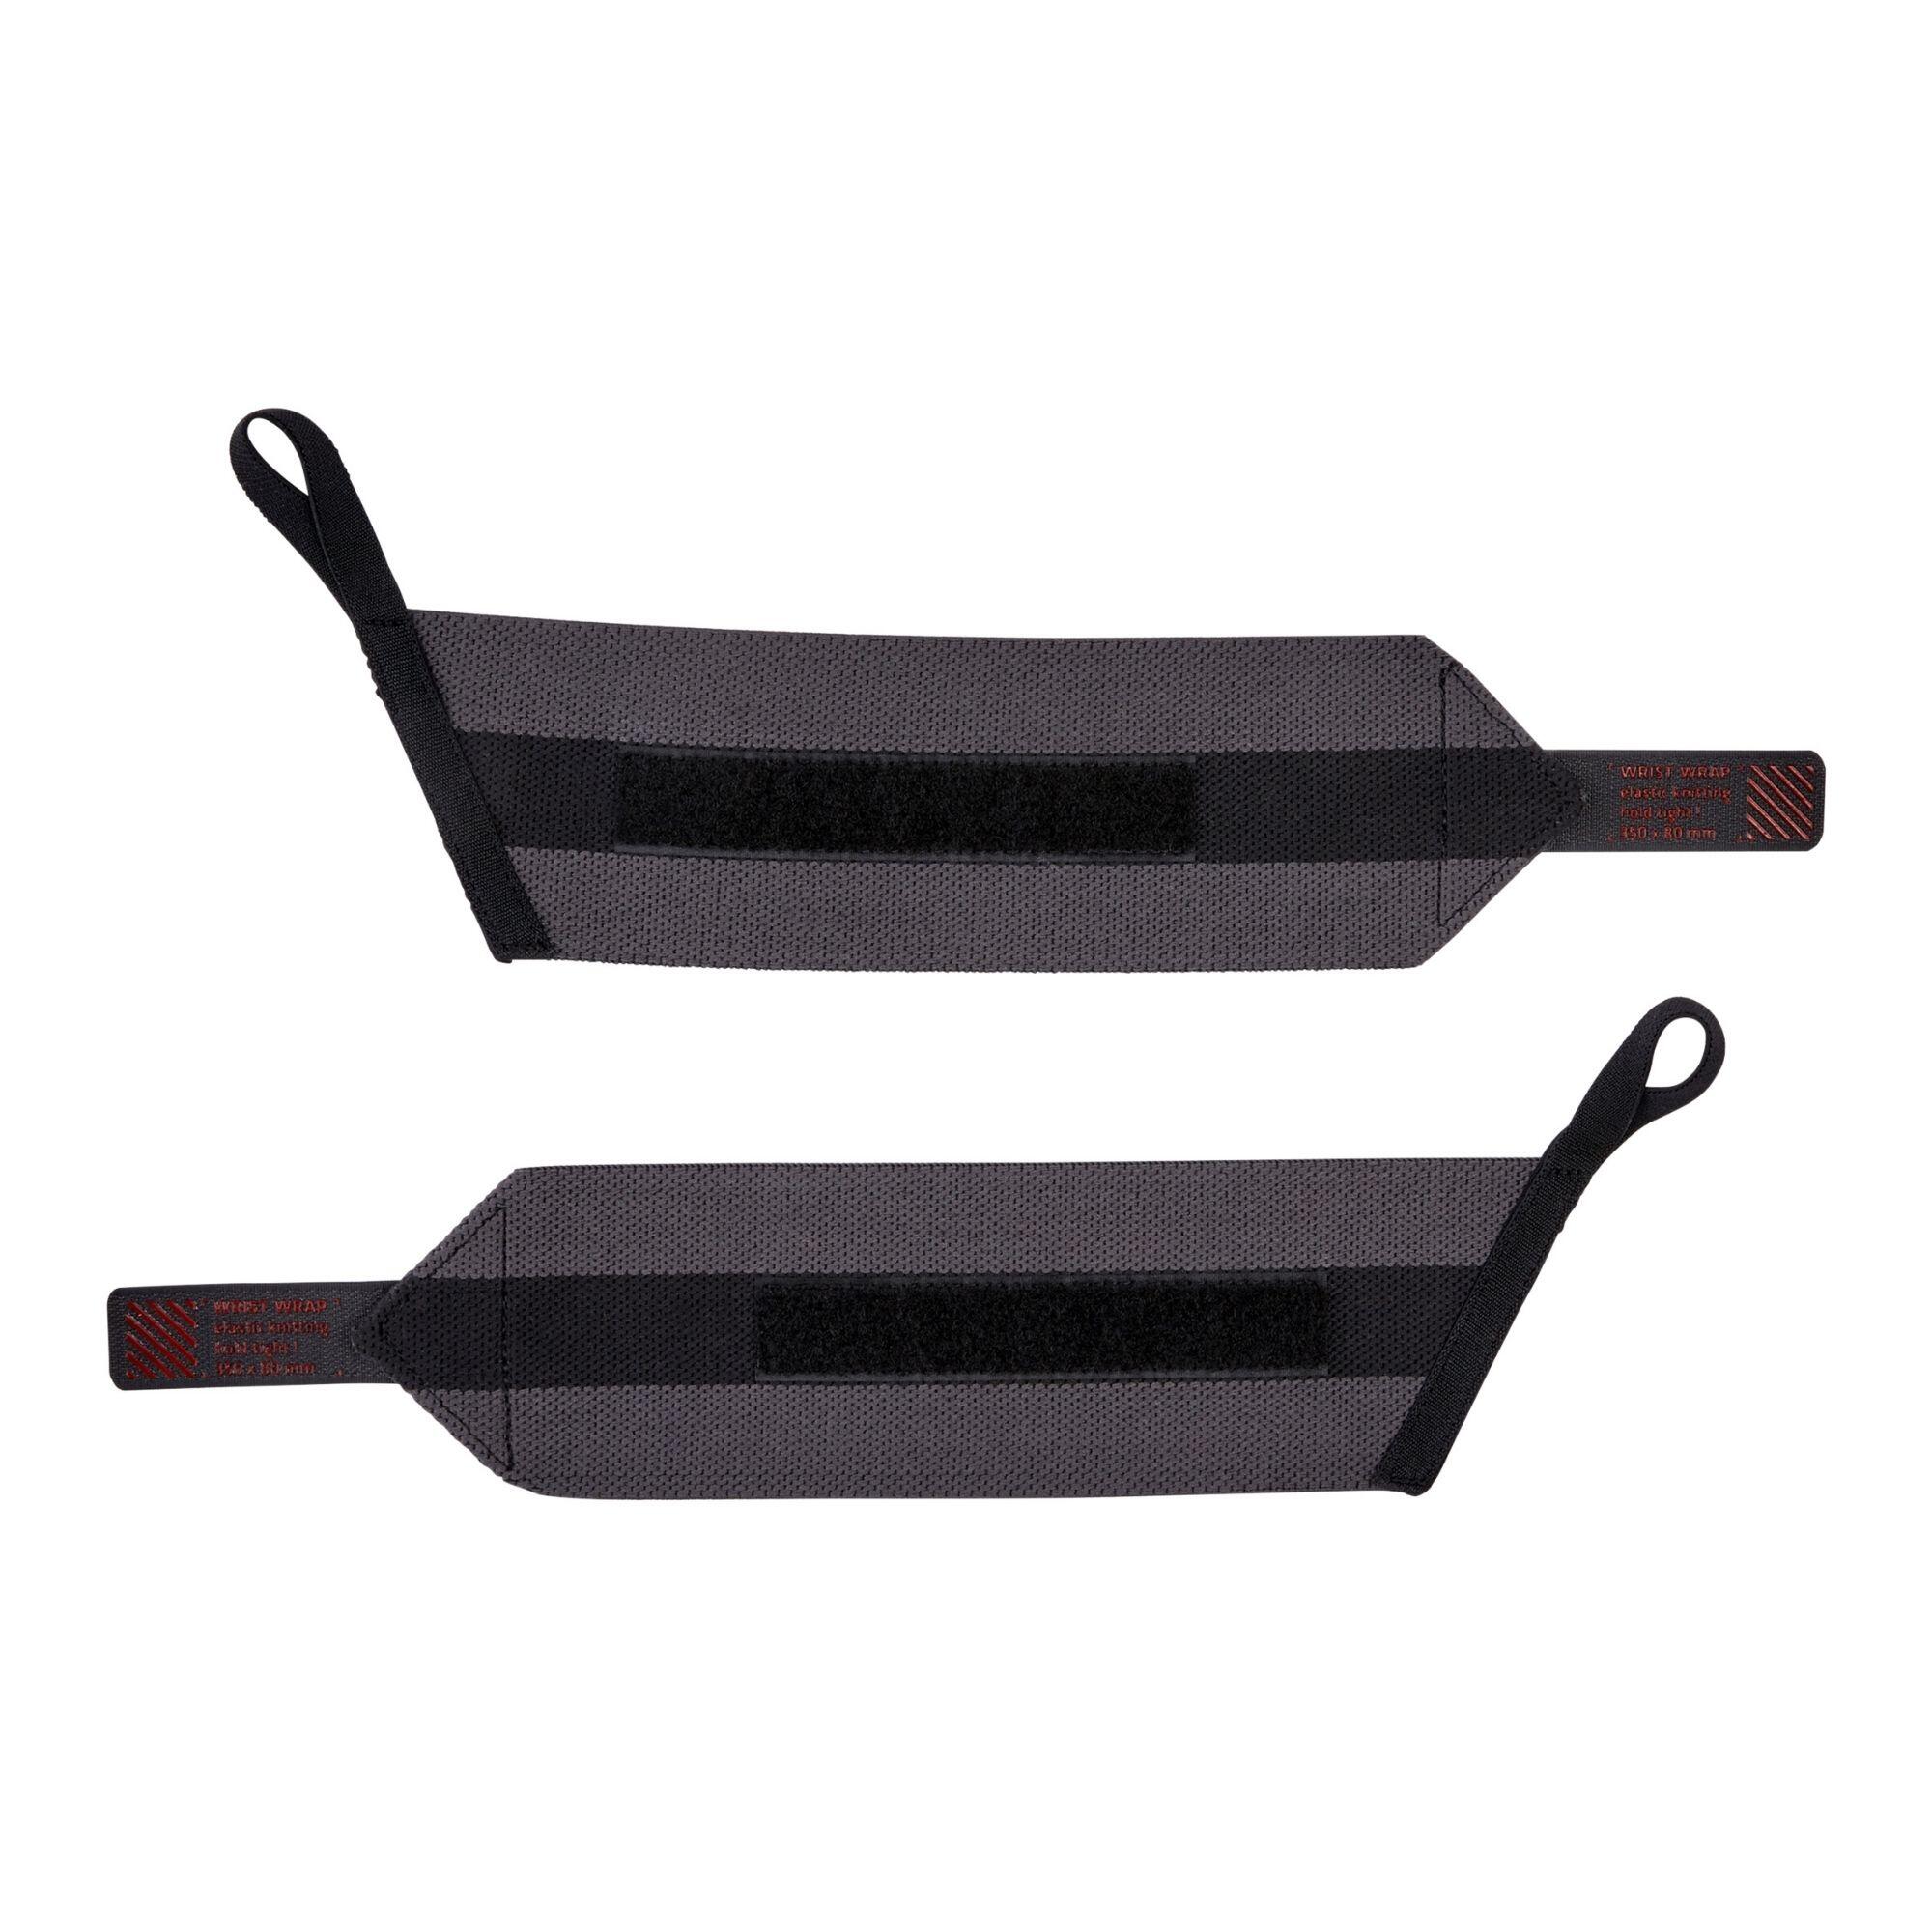 Повязки на запястья Fitness Wristwrap тёмно-серые DOMYOS, углерод серый